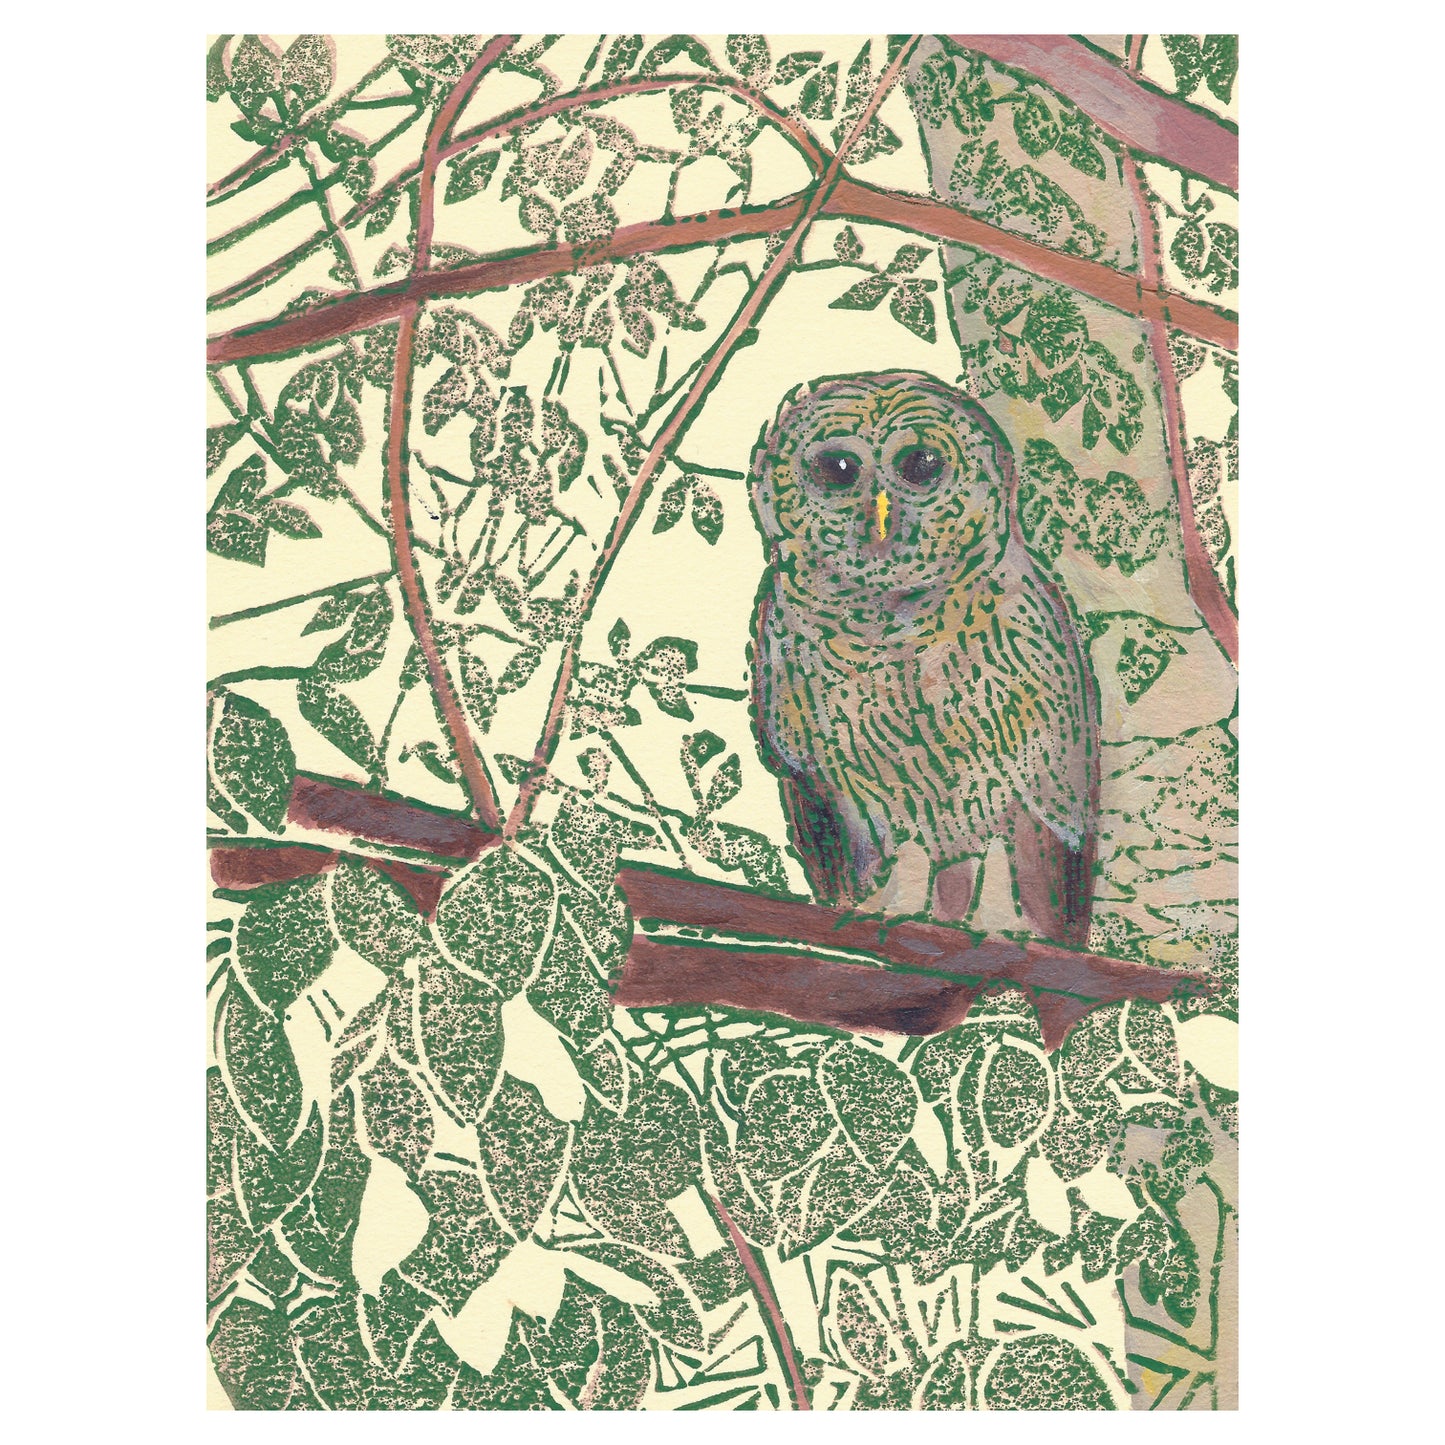 Owl art featuring a Barred Owl by printmaker Natalia Wohletz of Peninsula Prints, Mackinac Island, titled Hidden Owl.